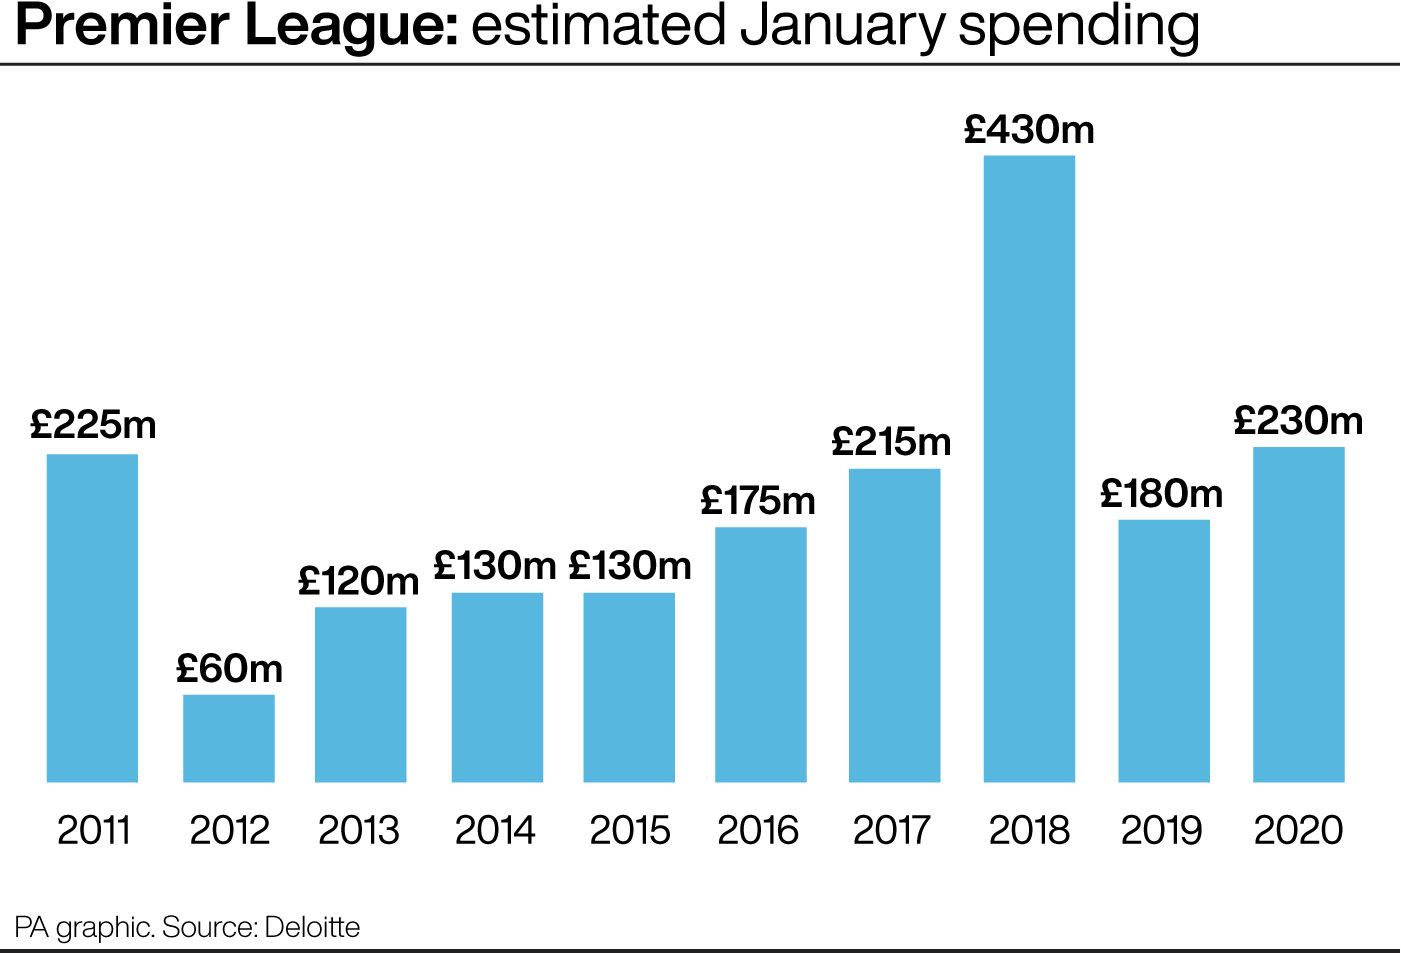 Premier League: estimated January spending 2011-2020